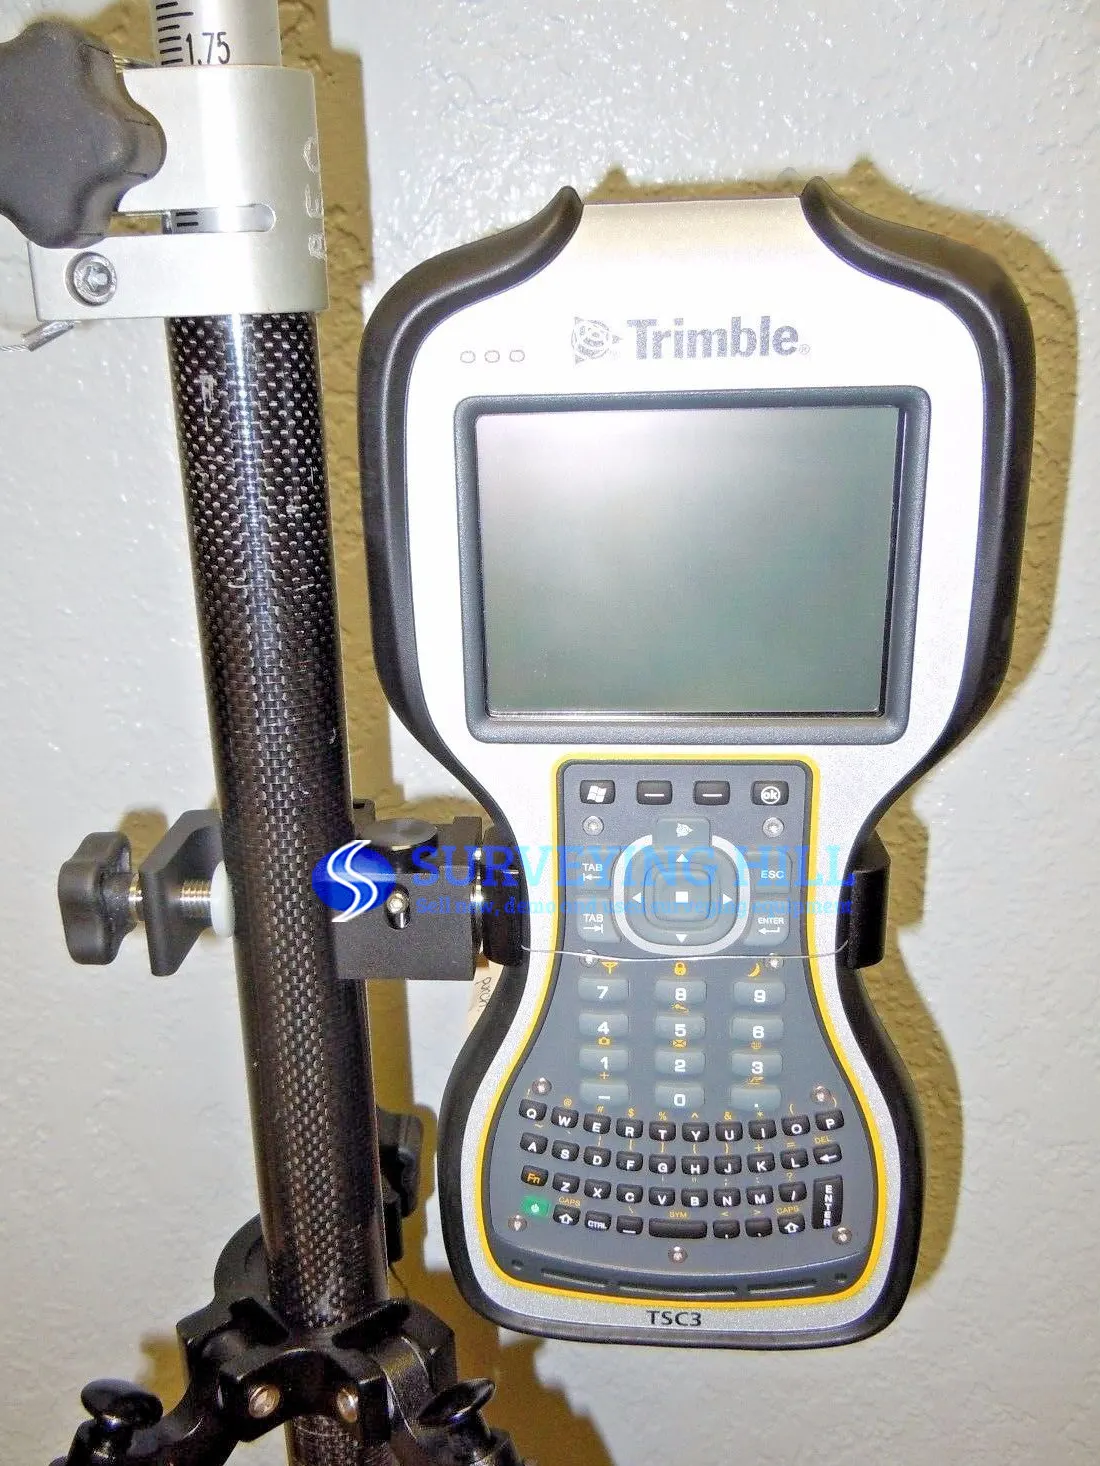 Trimble-S8-1-Robotic-Total-Station-TSC3-with-Access.webp